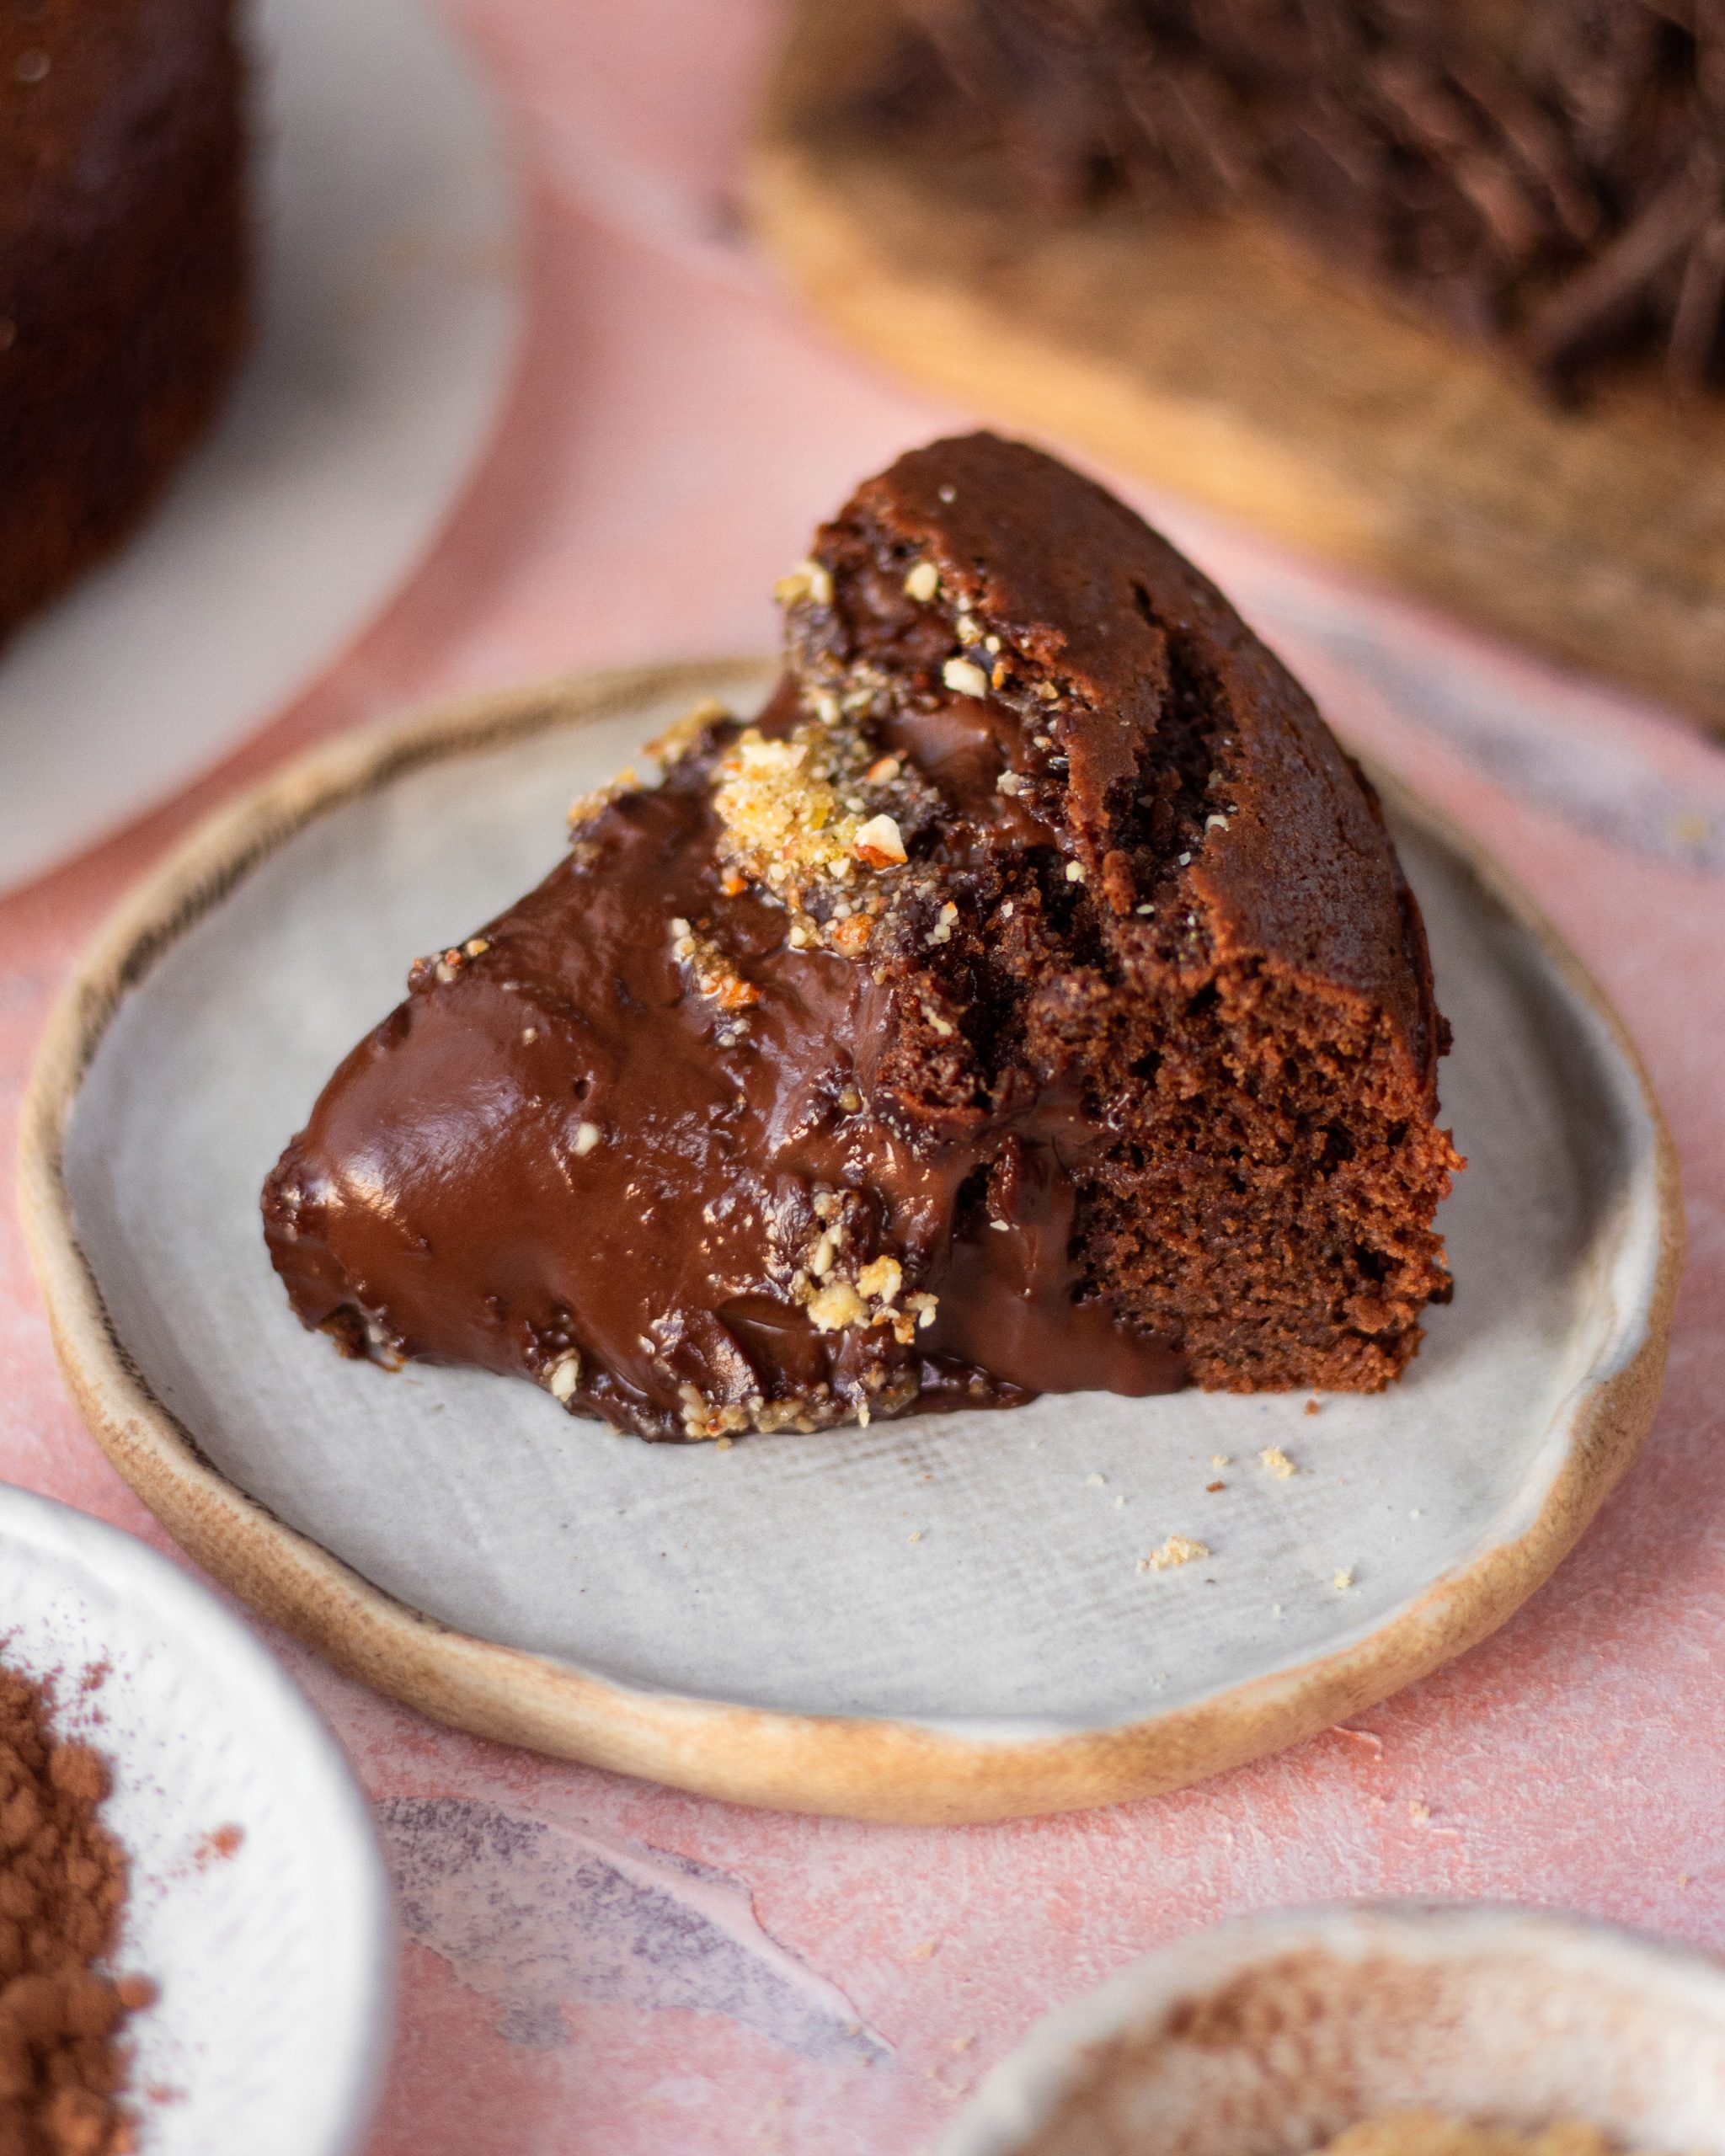 Best Chocolate Pudding Cake Recipe - How To Make Chocolate Pudding Cake